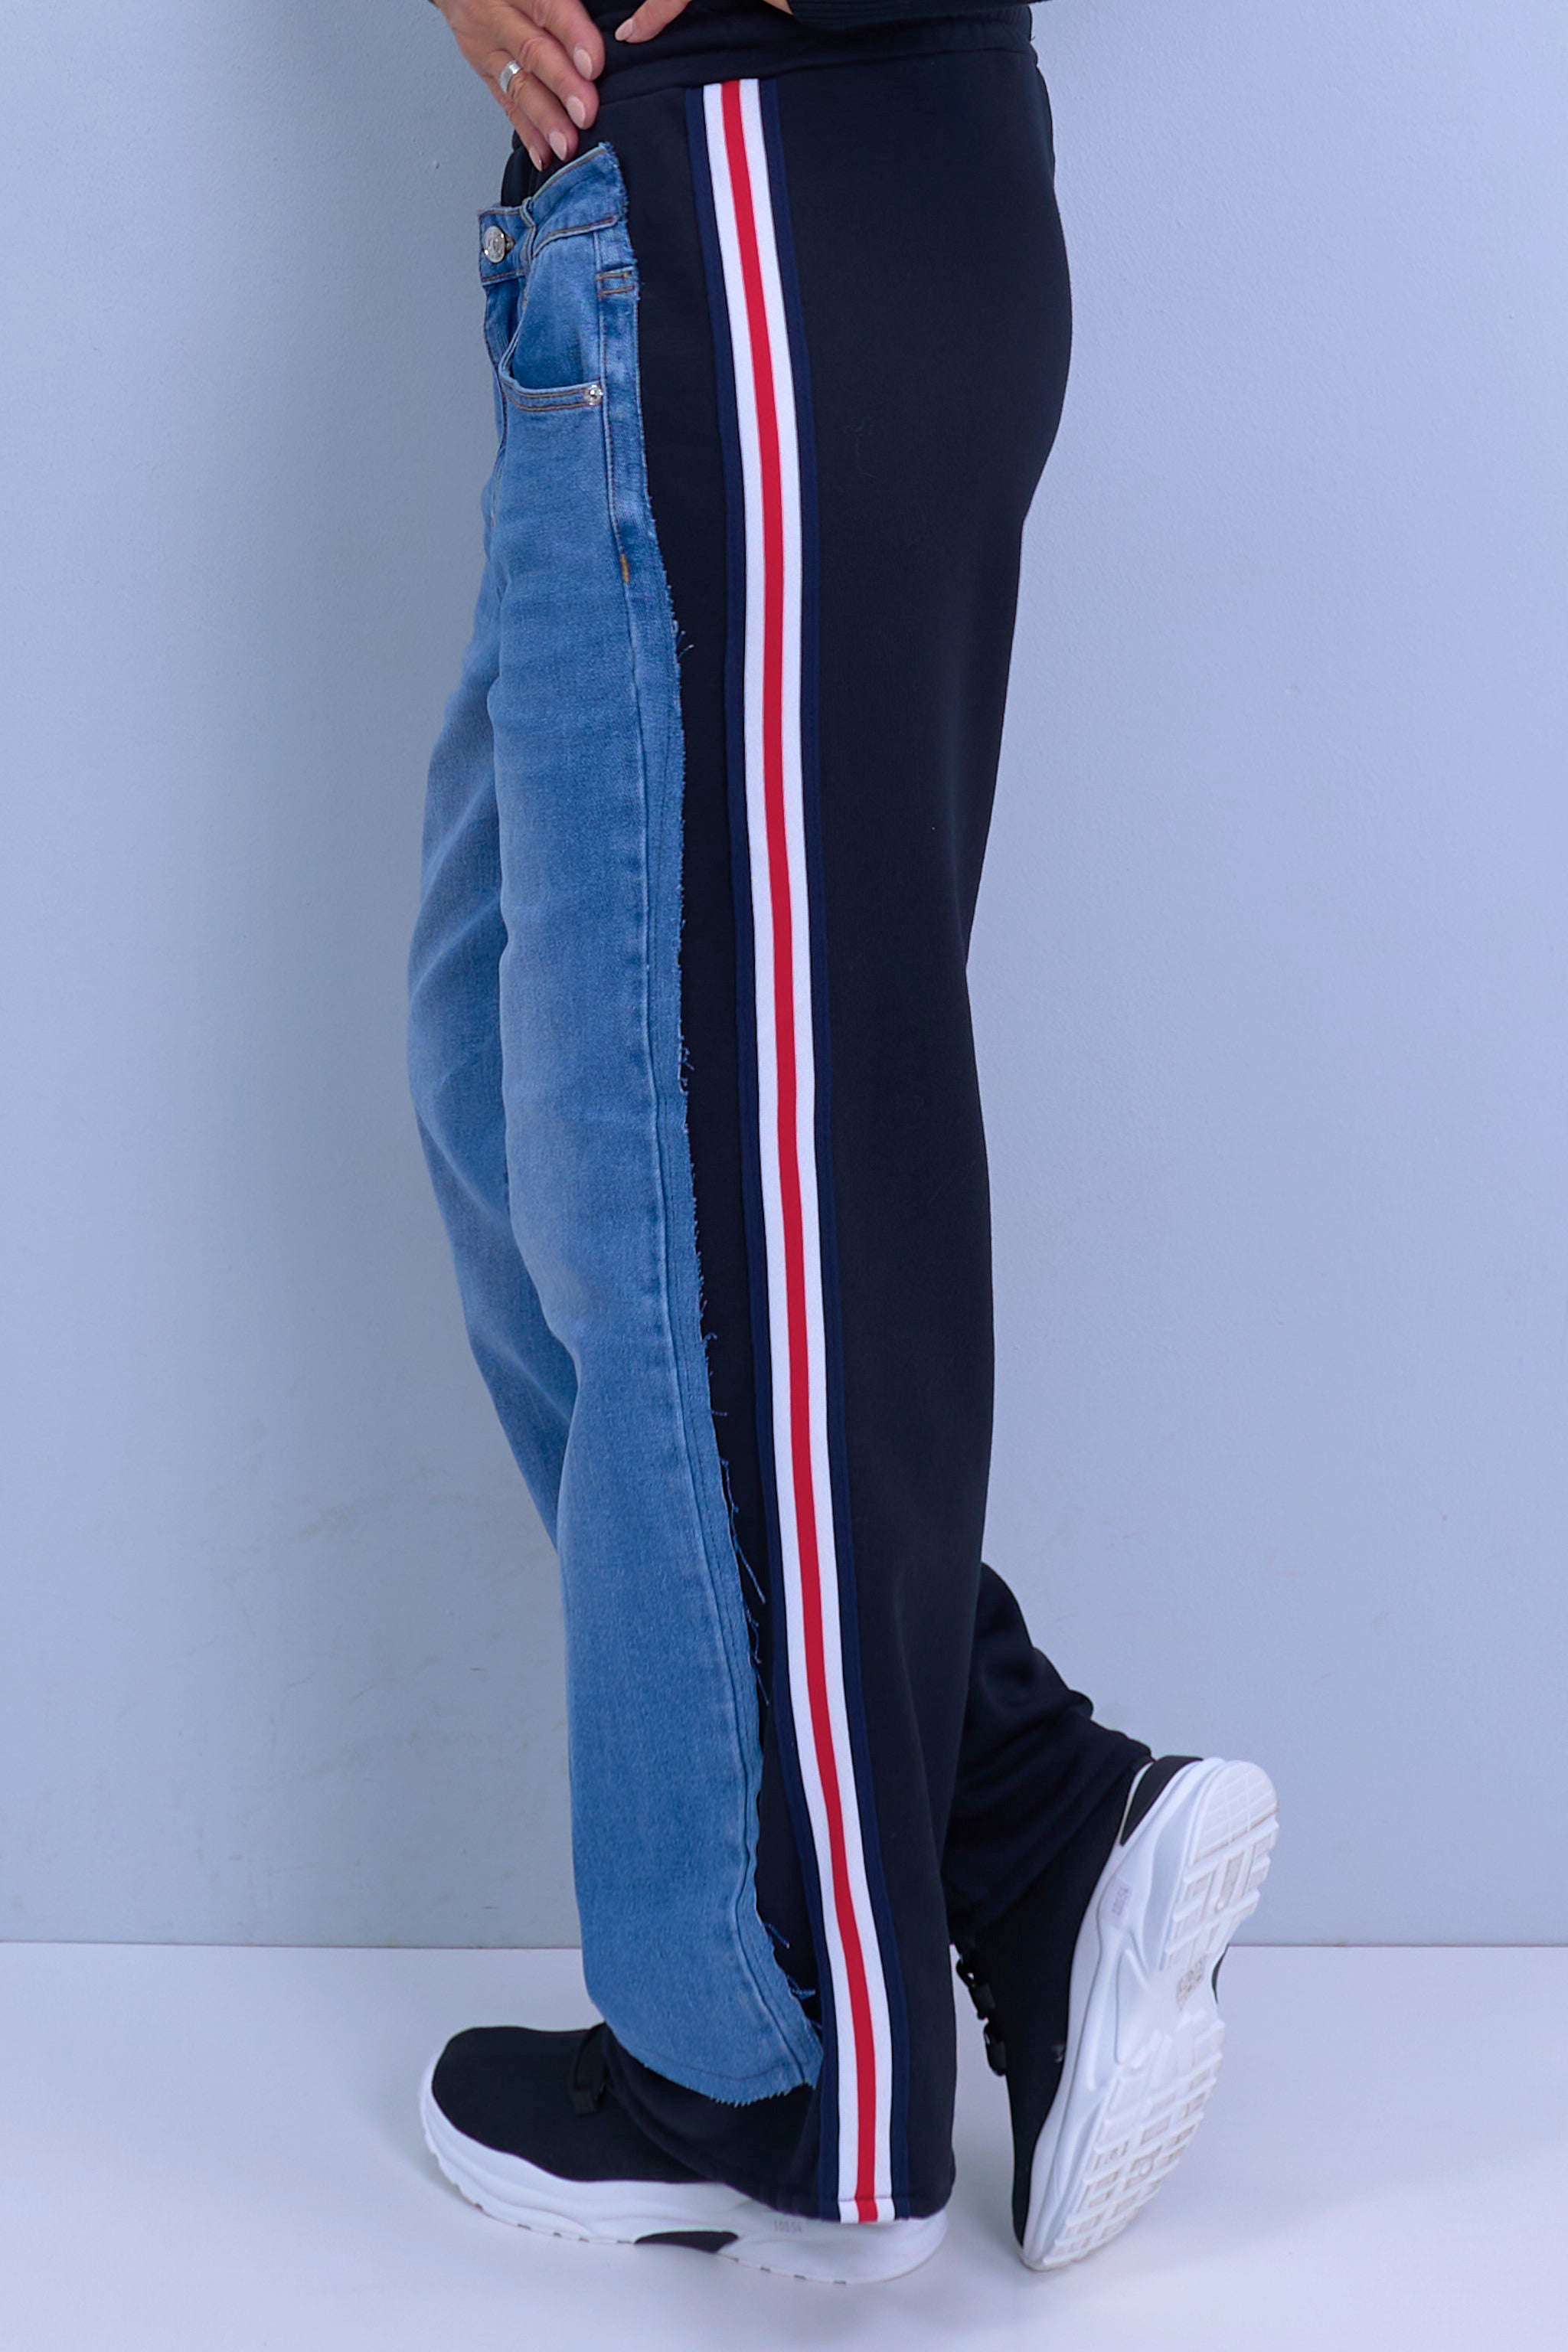 Sweatpants with jeans insert, black-denim blue